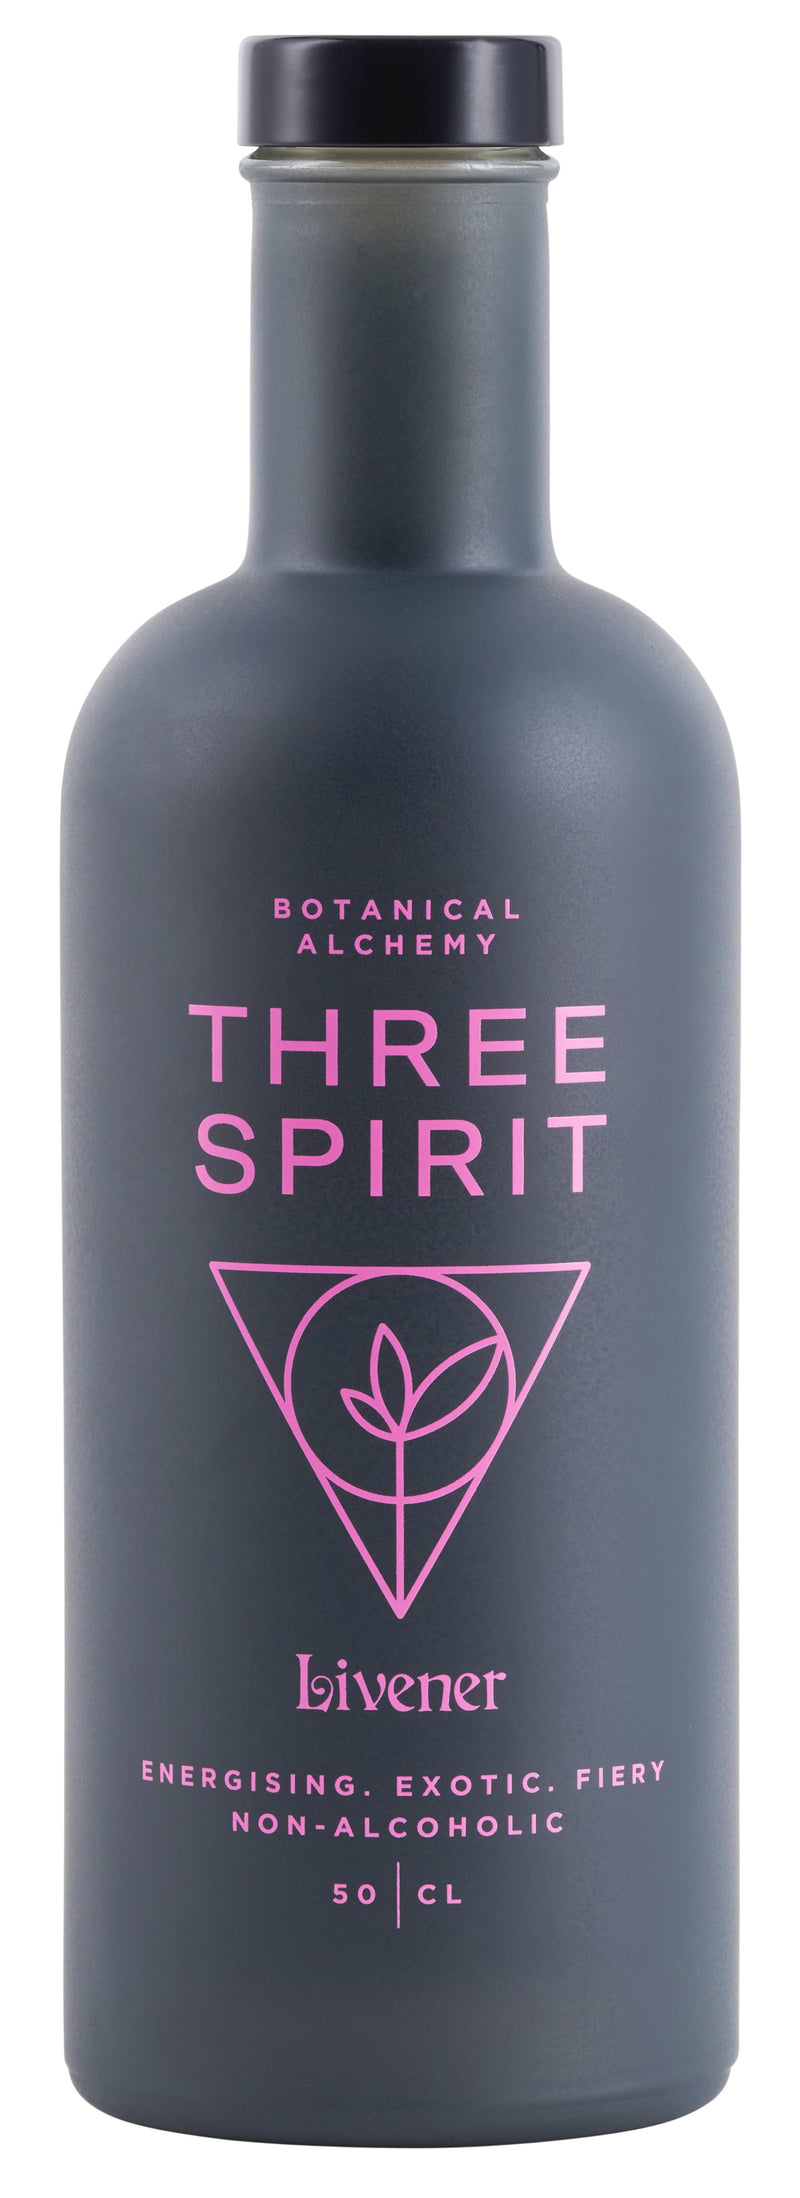 Three Spirit Livener 50cl